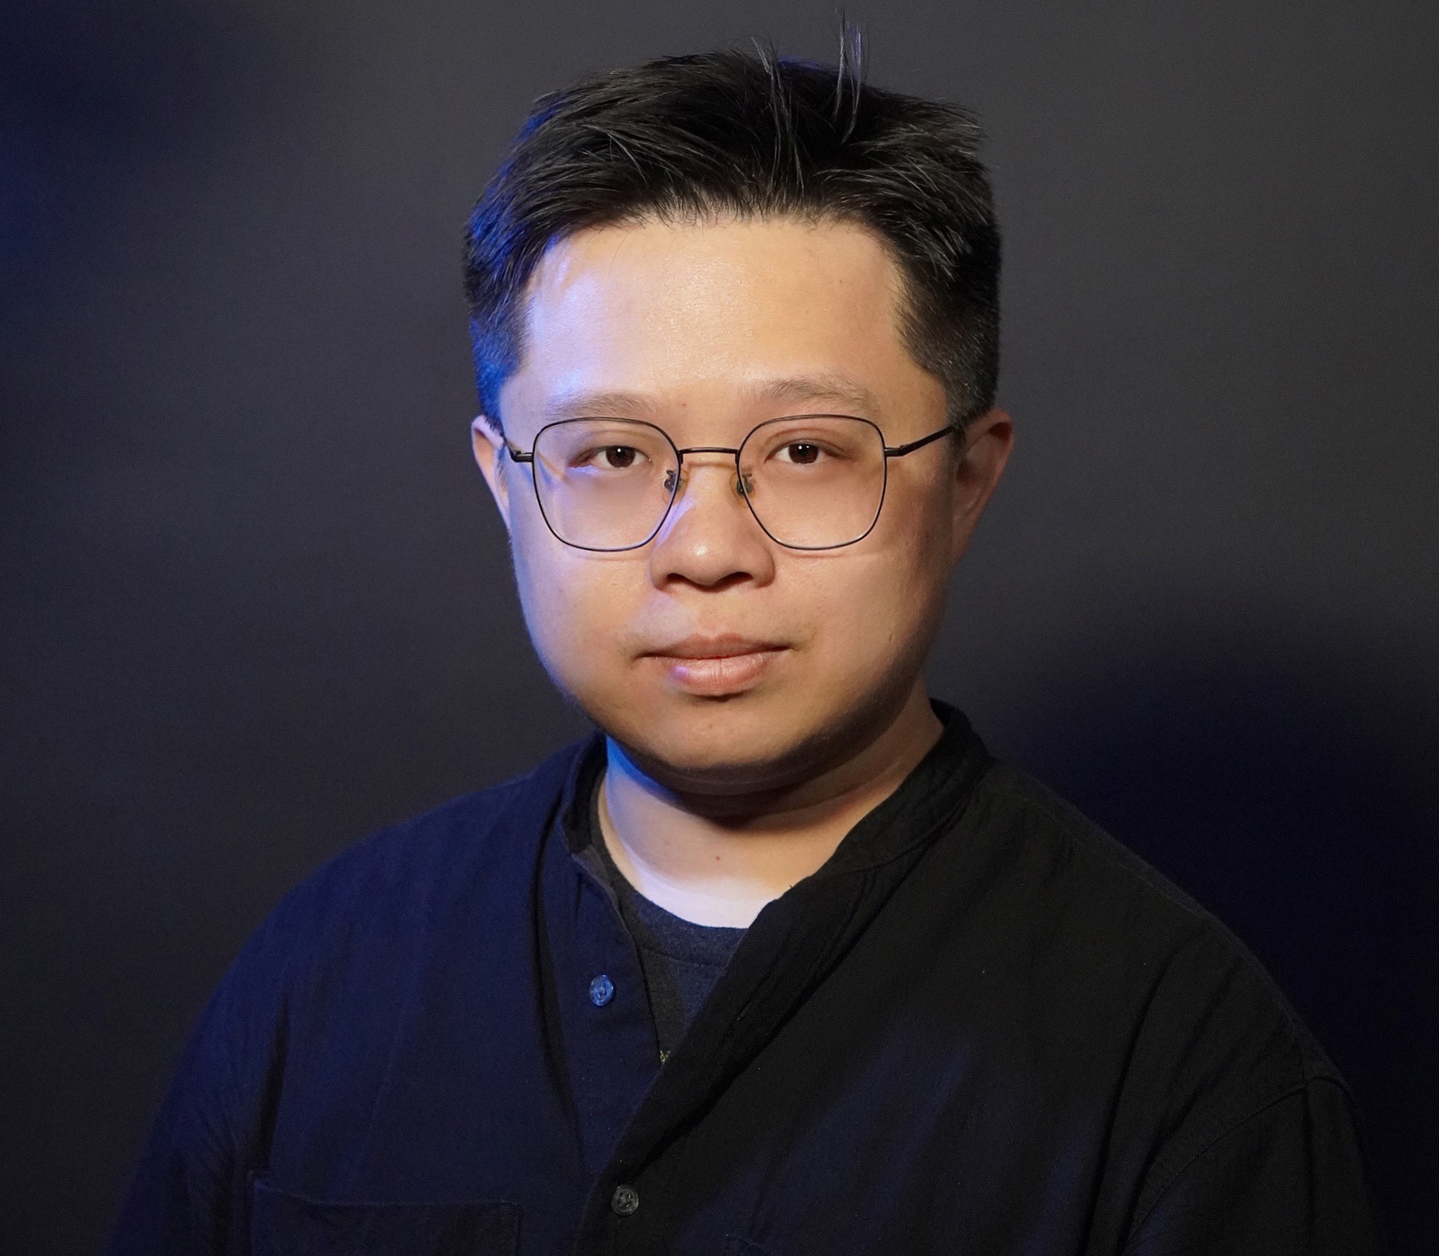 Liang's profile image